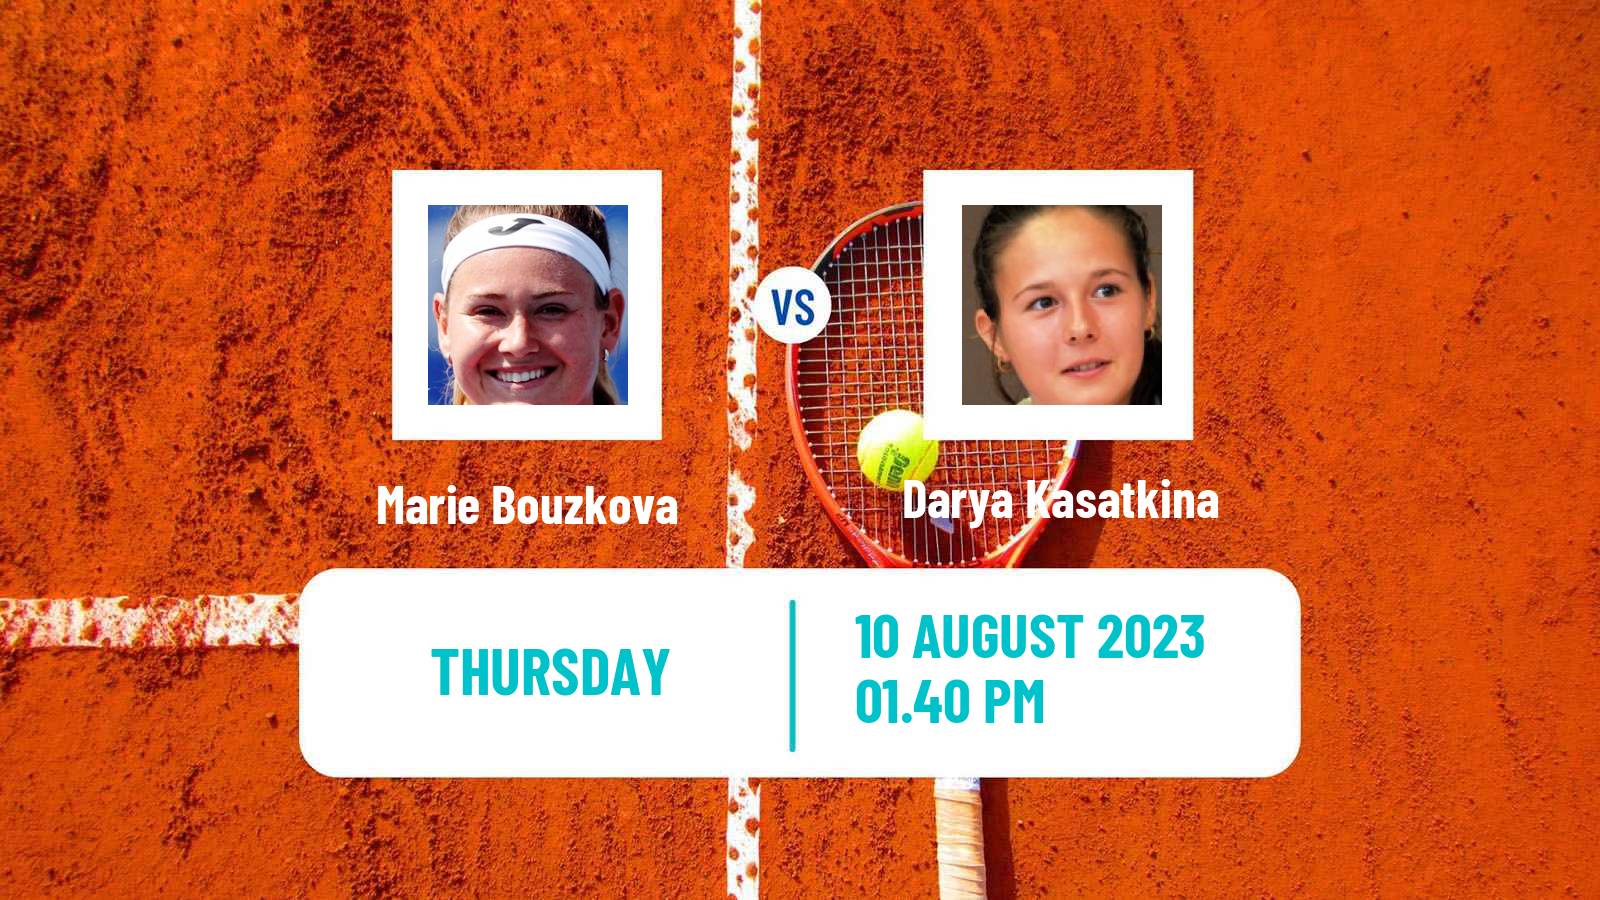 Tennis WTA Montreal Marie Bouzkova - Darya Kasatkina